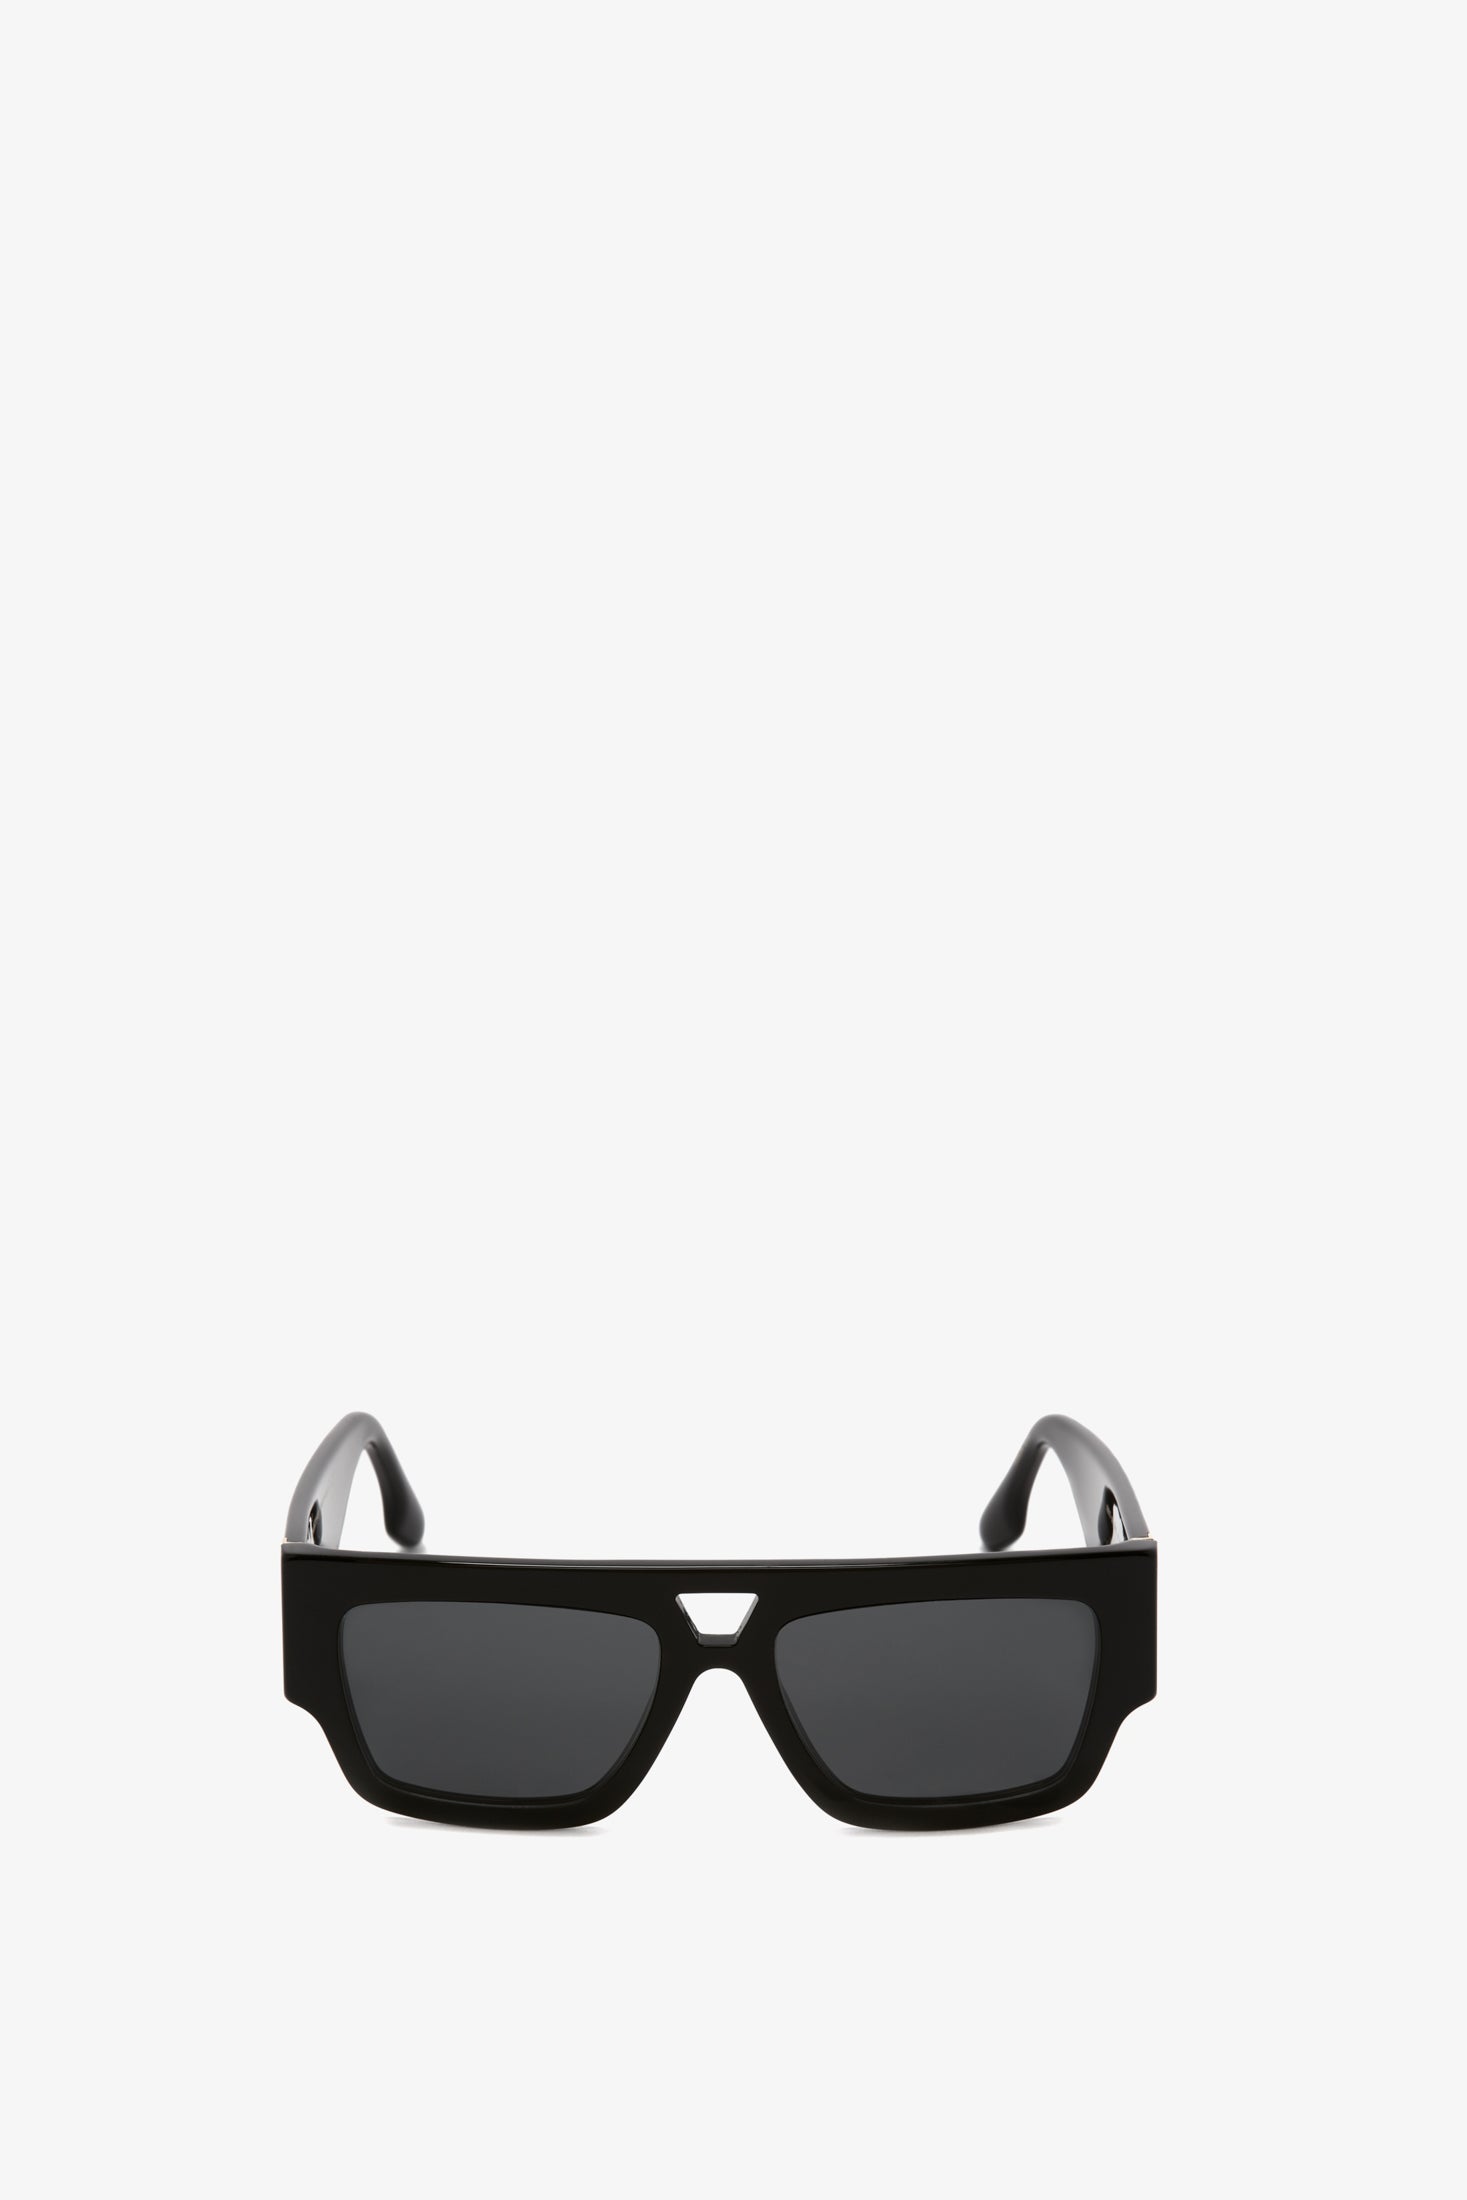 Fashion essentials: Louis Vuitton Wire Frame Sunglasses for Fall